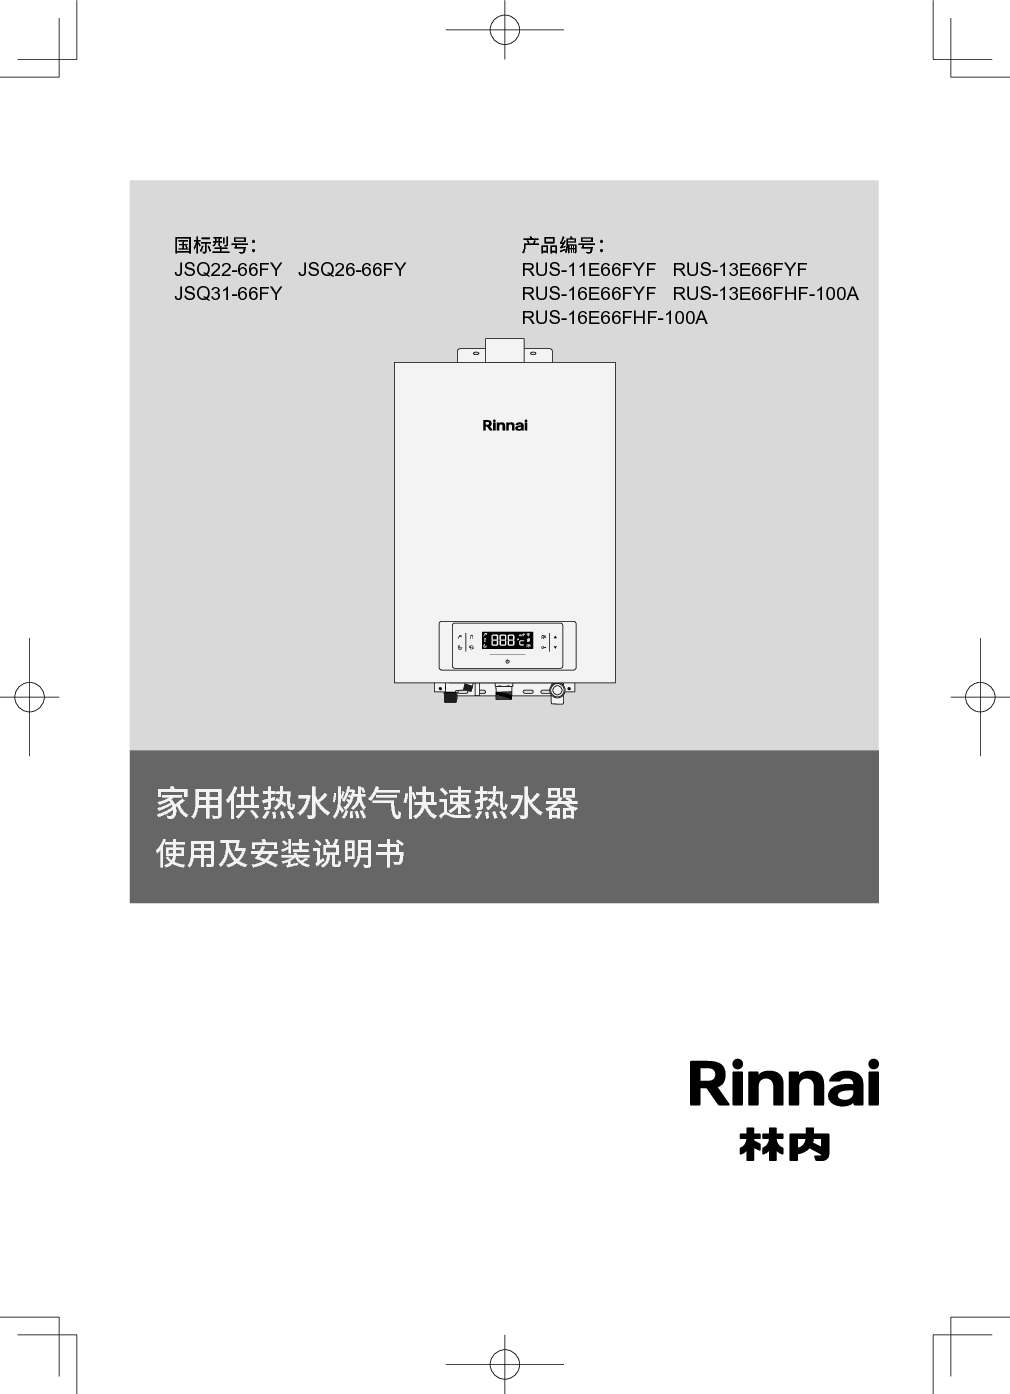 林内 Rinnai JSQ22-66FY, RUS-11E66FYF 使用说明书 封面